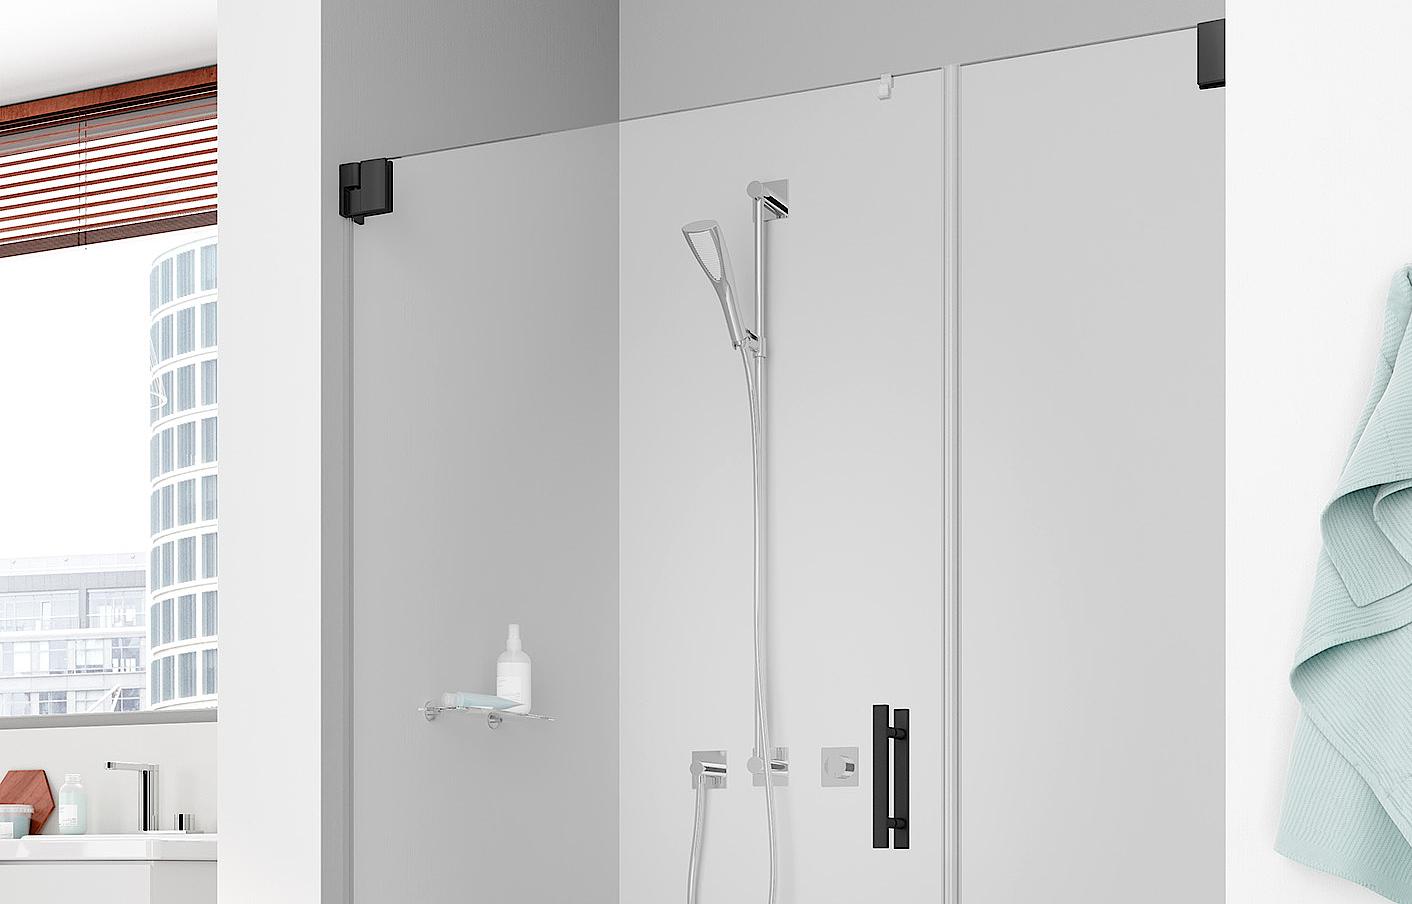 Kermi hinged shower enclosure, FILIA single panel hinged door and fixed panel